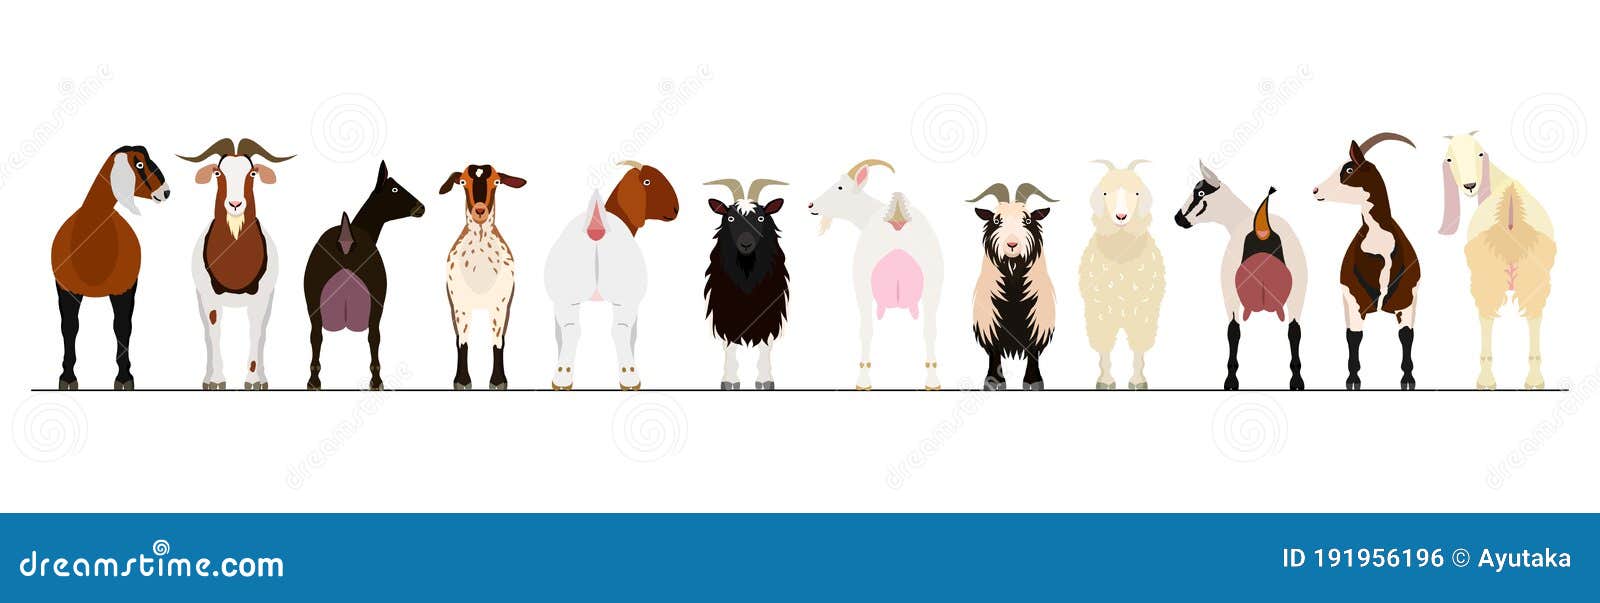 various breeds of goats border